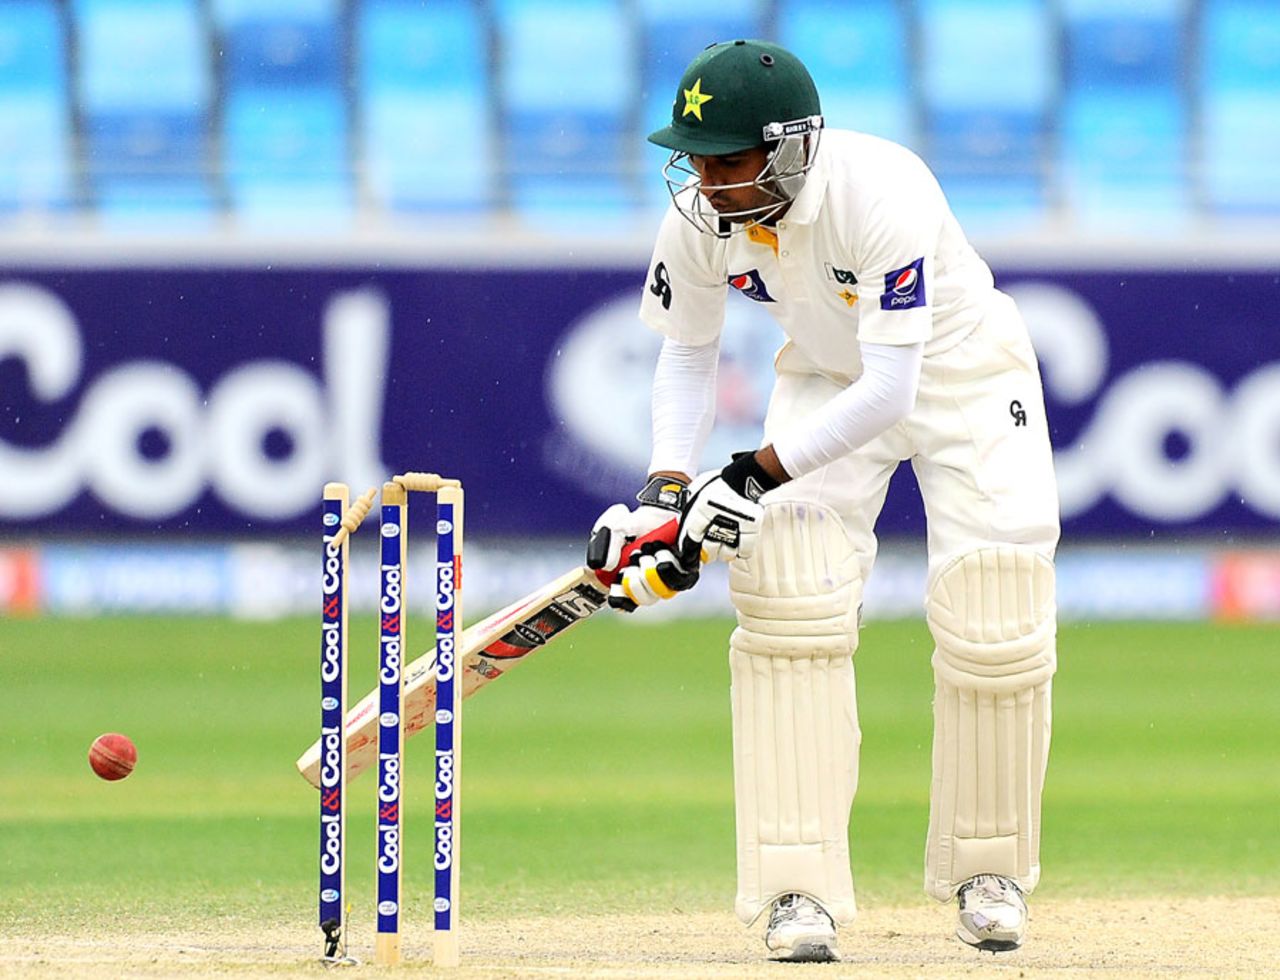 Bilawal Bhatti is bowled, Pakistan v Sri Lanka, 2nd Test, Dubai, 4th day, January 11, 2014